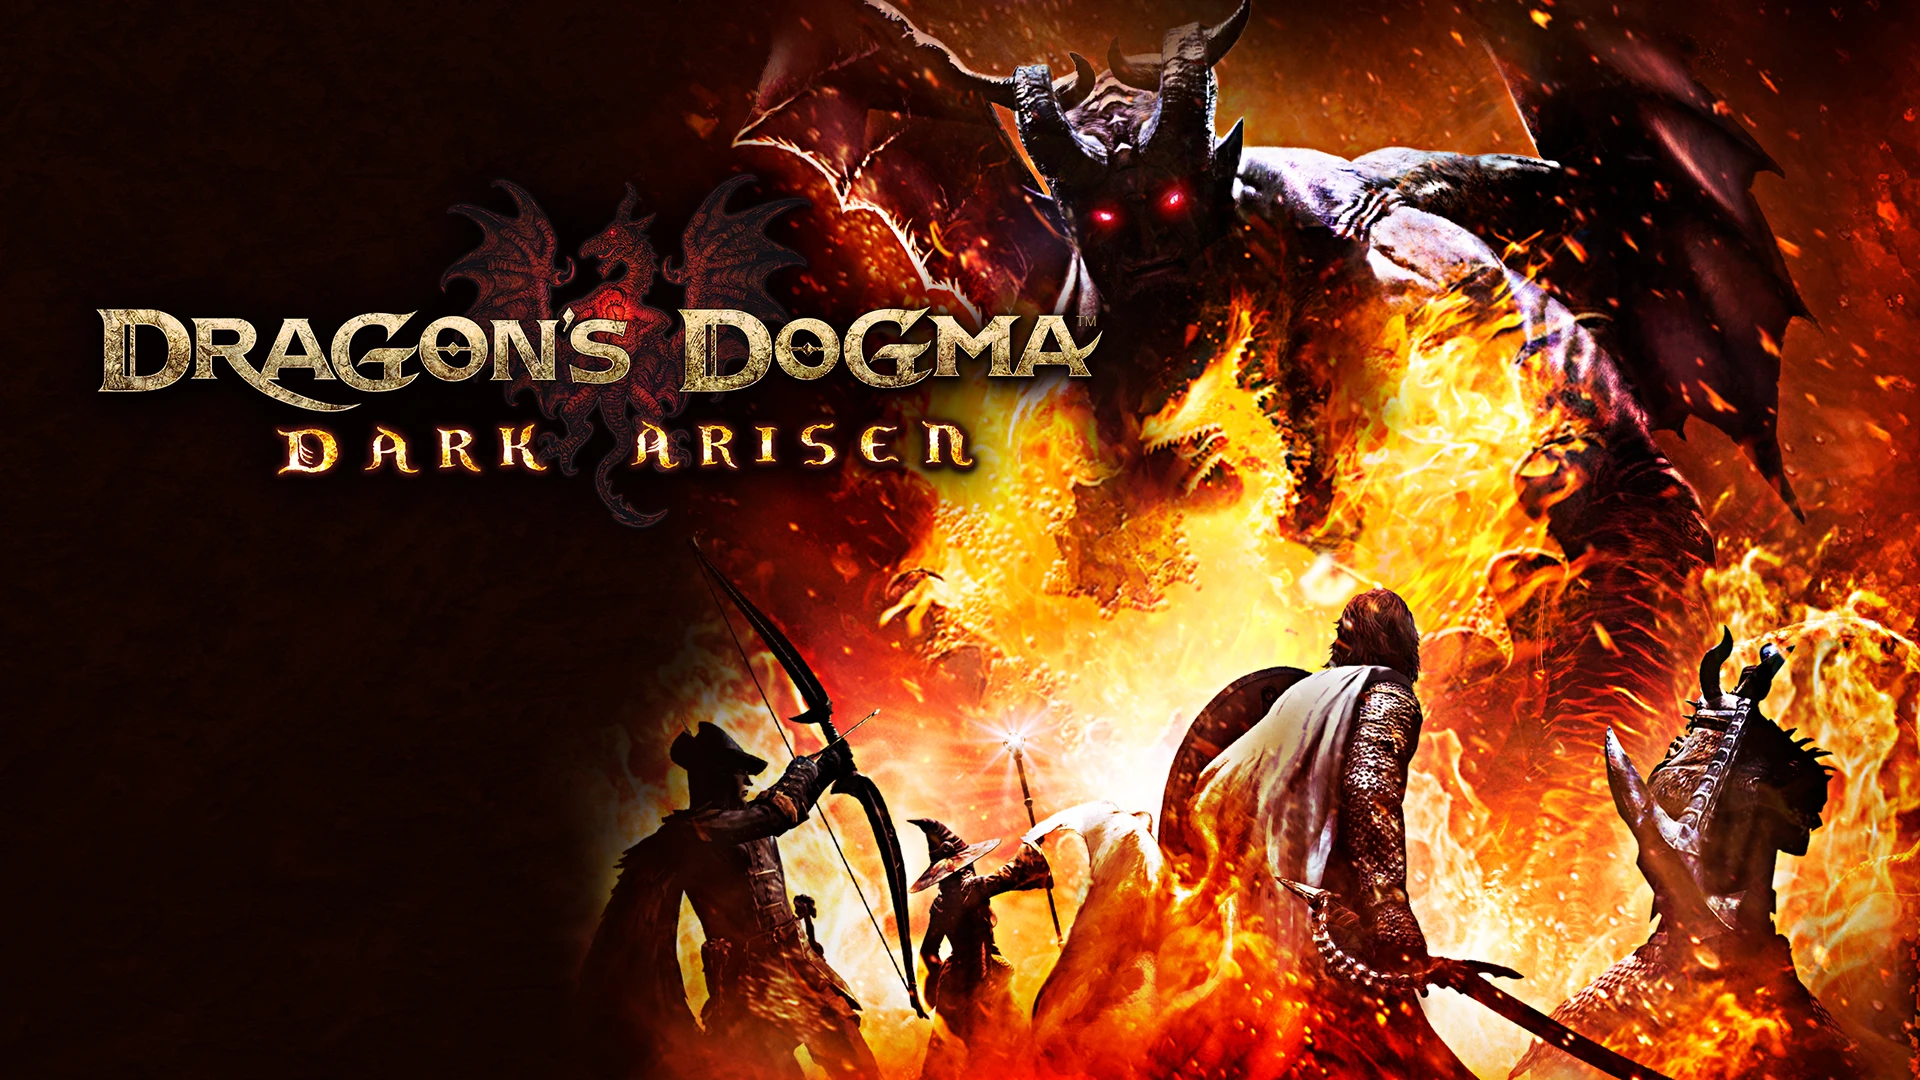 Dragon's Dogma Dark Arisen Wallpaper Full HD 001